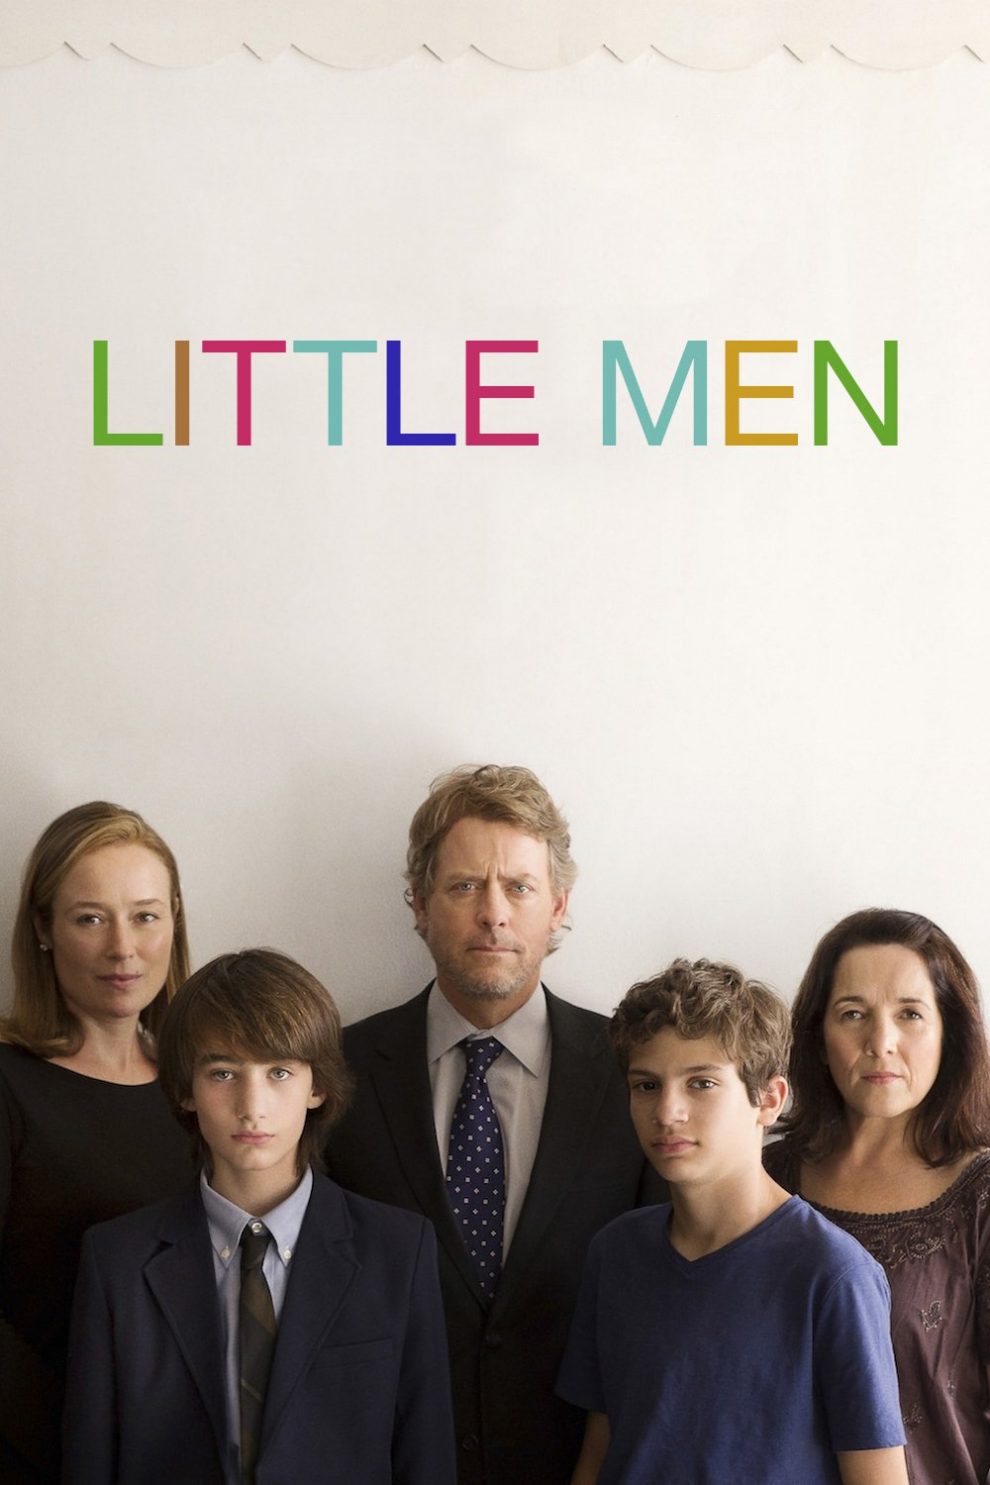 Poster for the movie "Little Men"